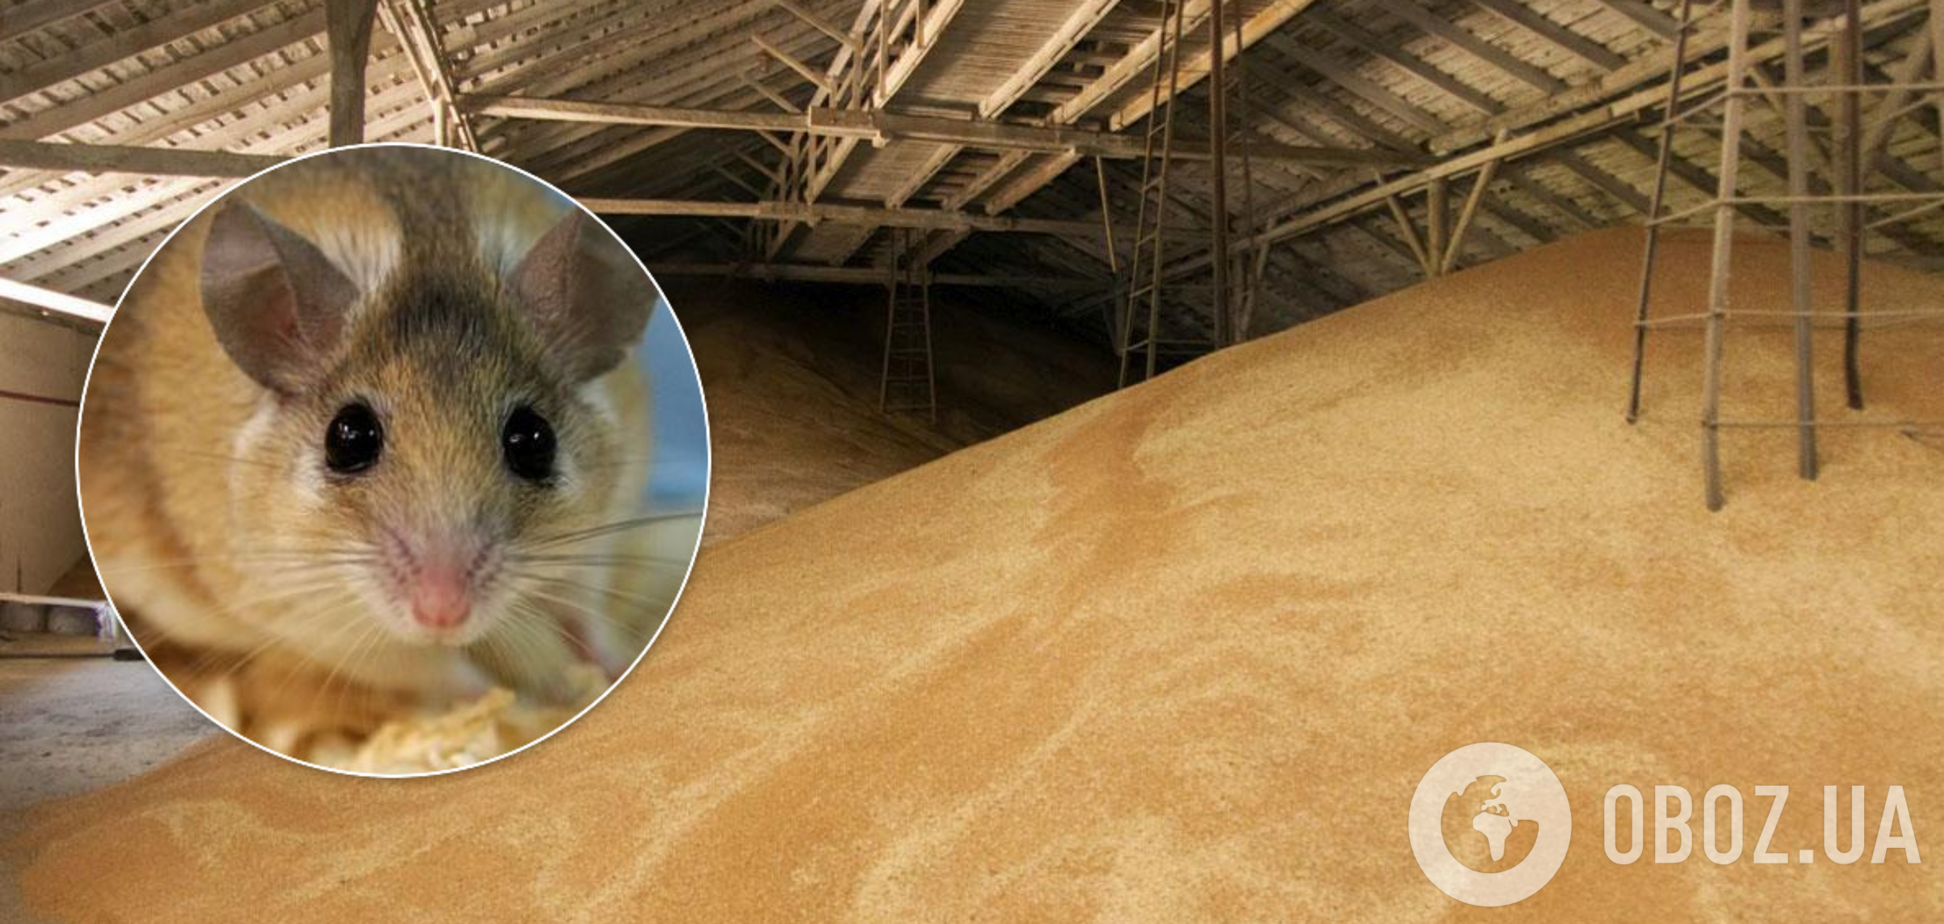 'Съели' 2700 вагонов зерна: в МВД пообещали назвать имена 'мышей'